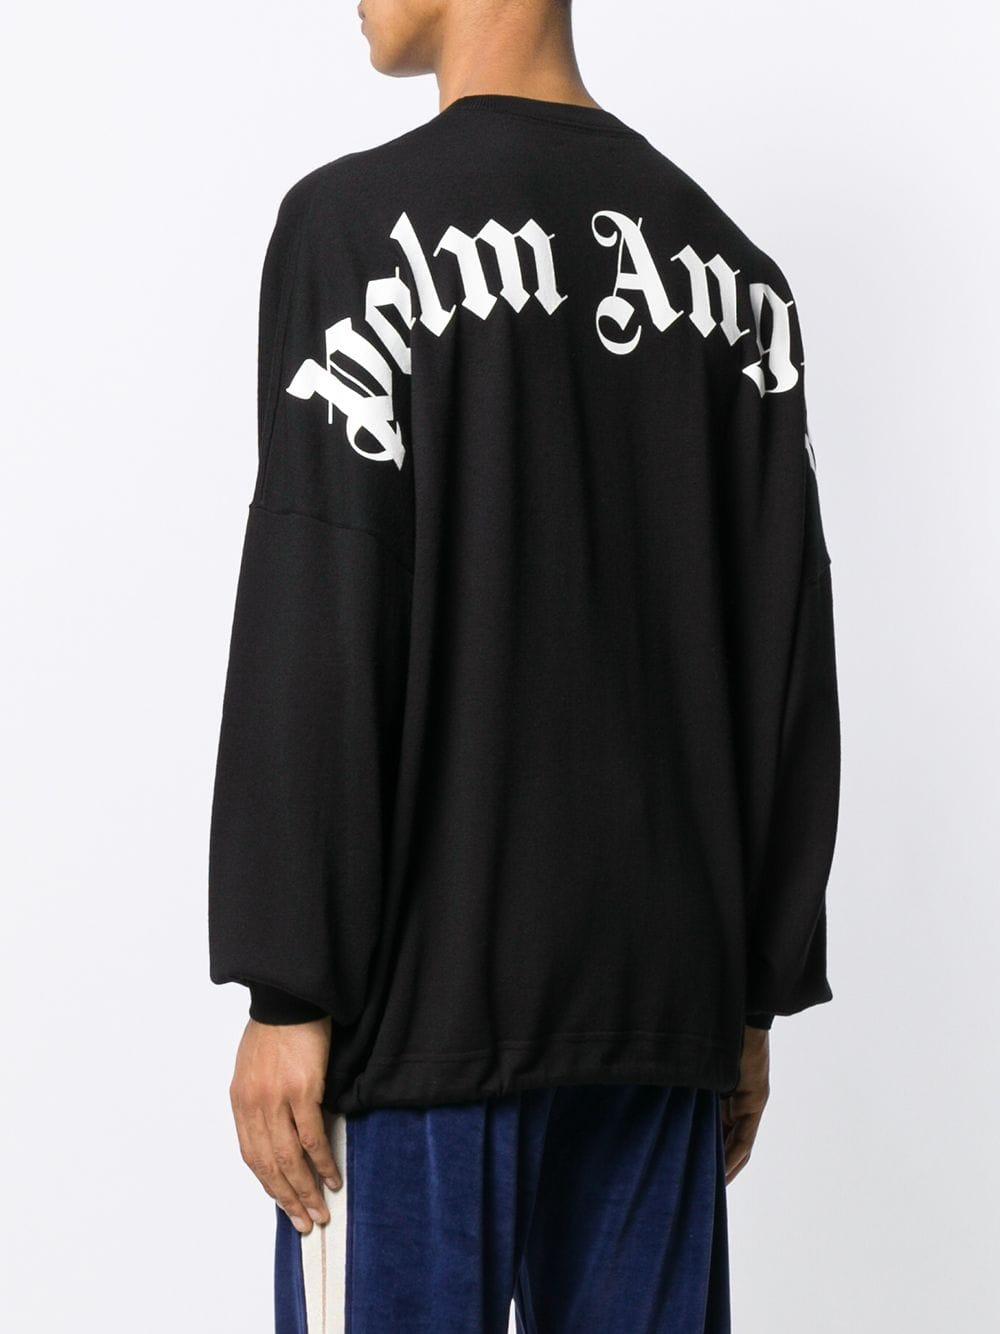 Palm Angels Wool Logo Jumper in Black for Men - Lyst